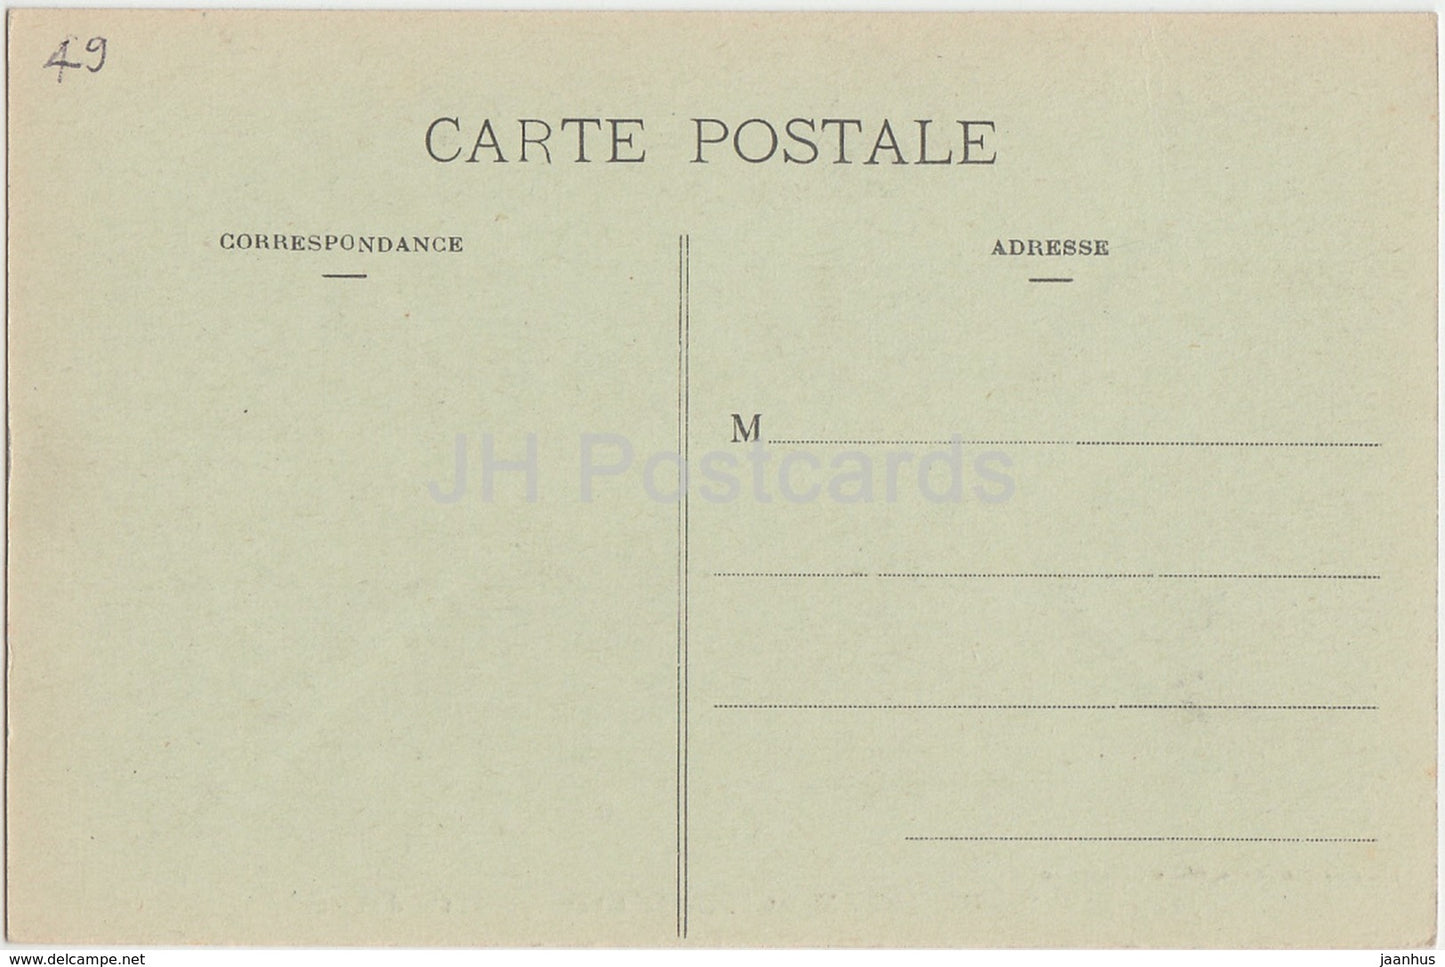 Beaupreau - Le Chateau - Porte d'entree - Schloss - 451 - alte Postkarte - Frankreich - unbenutzt